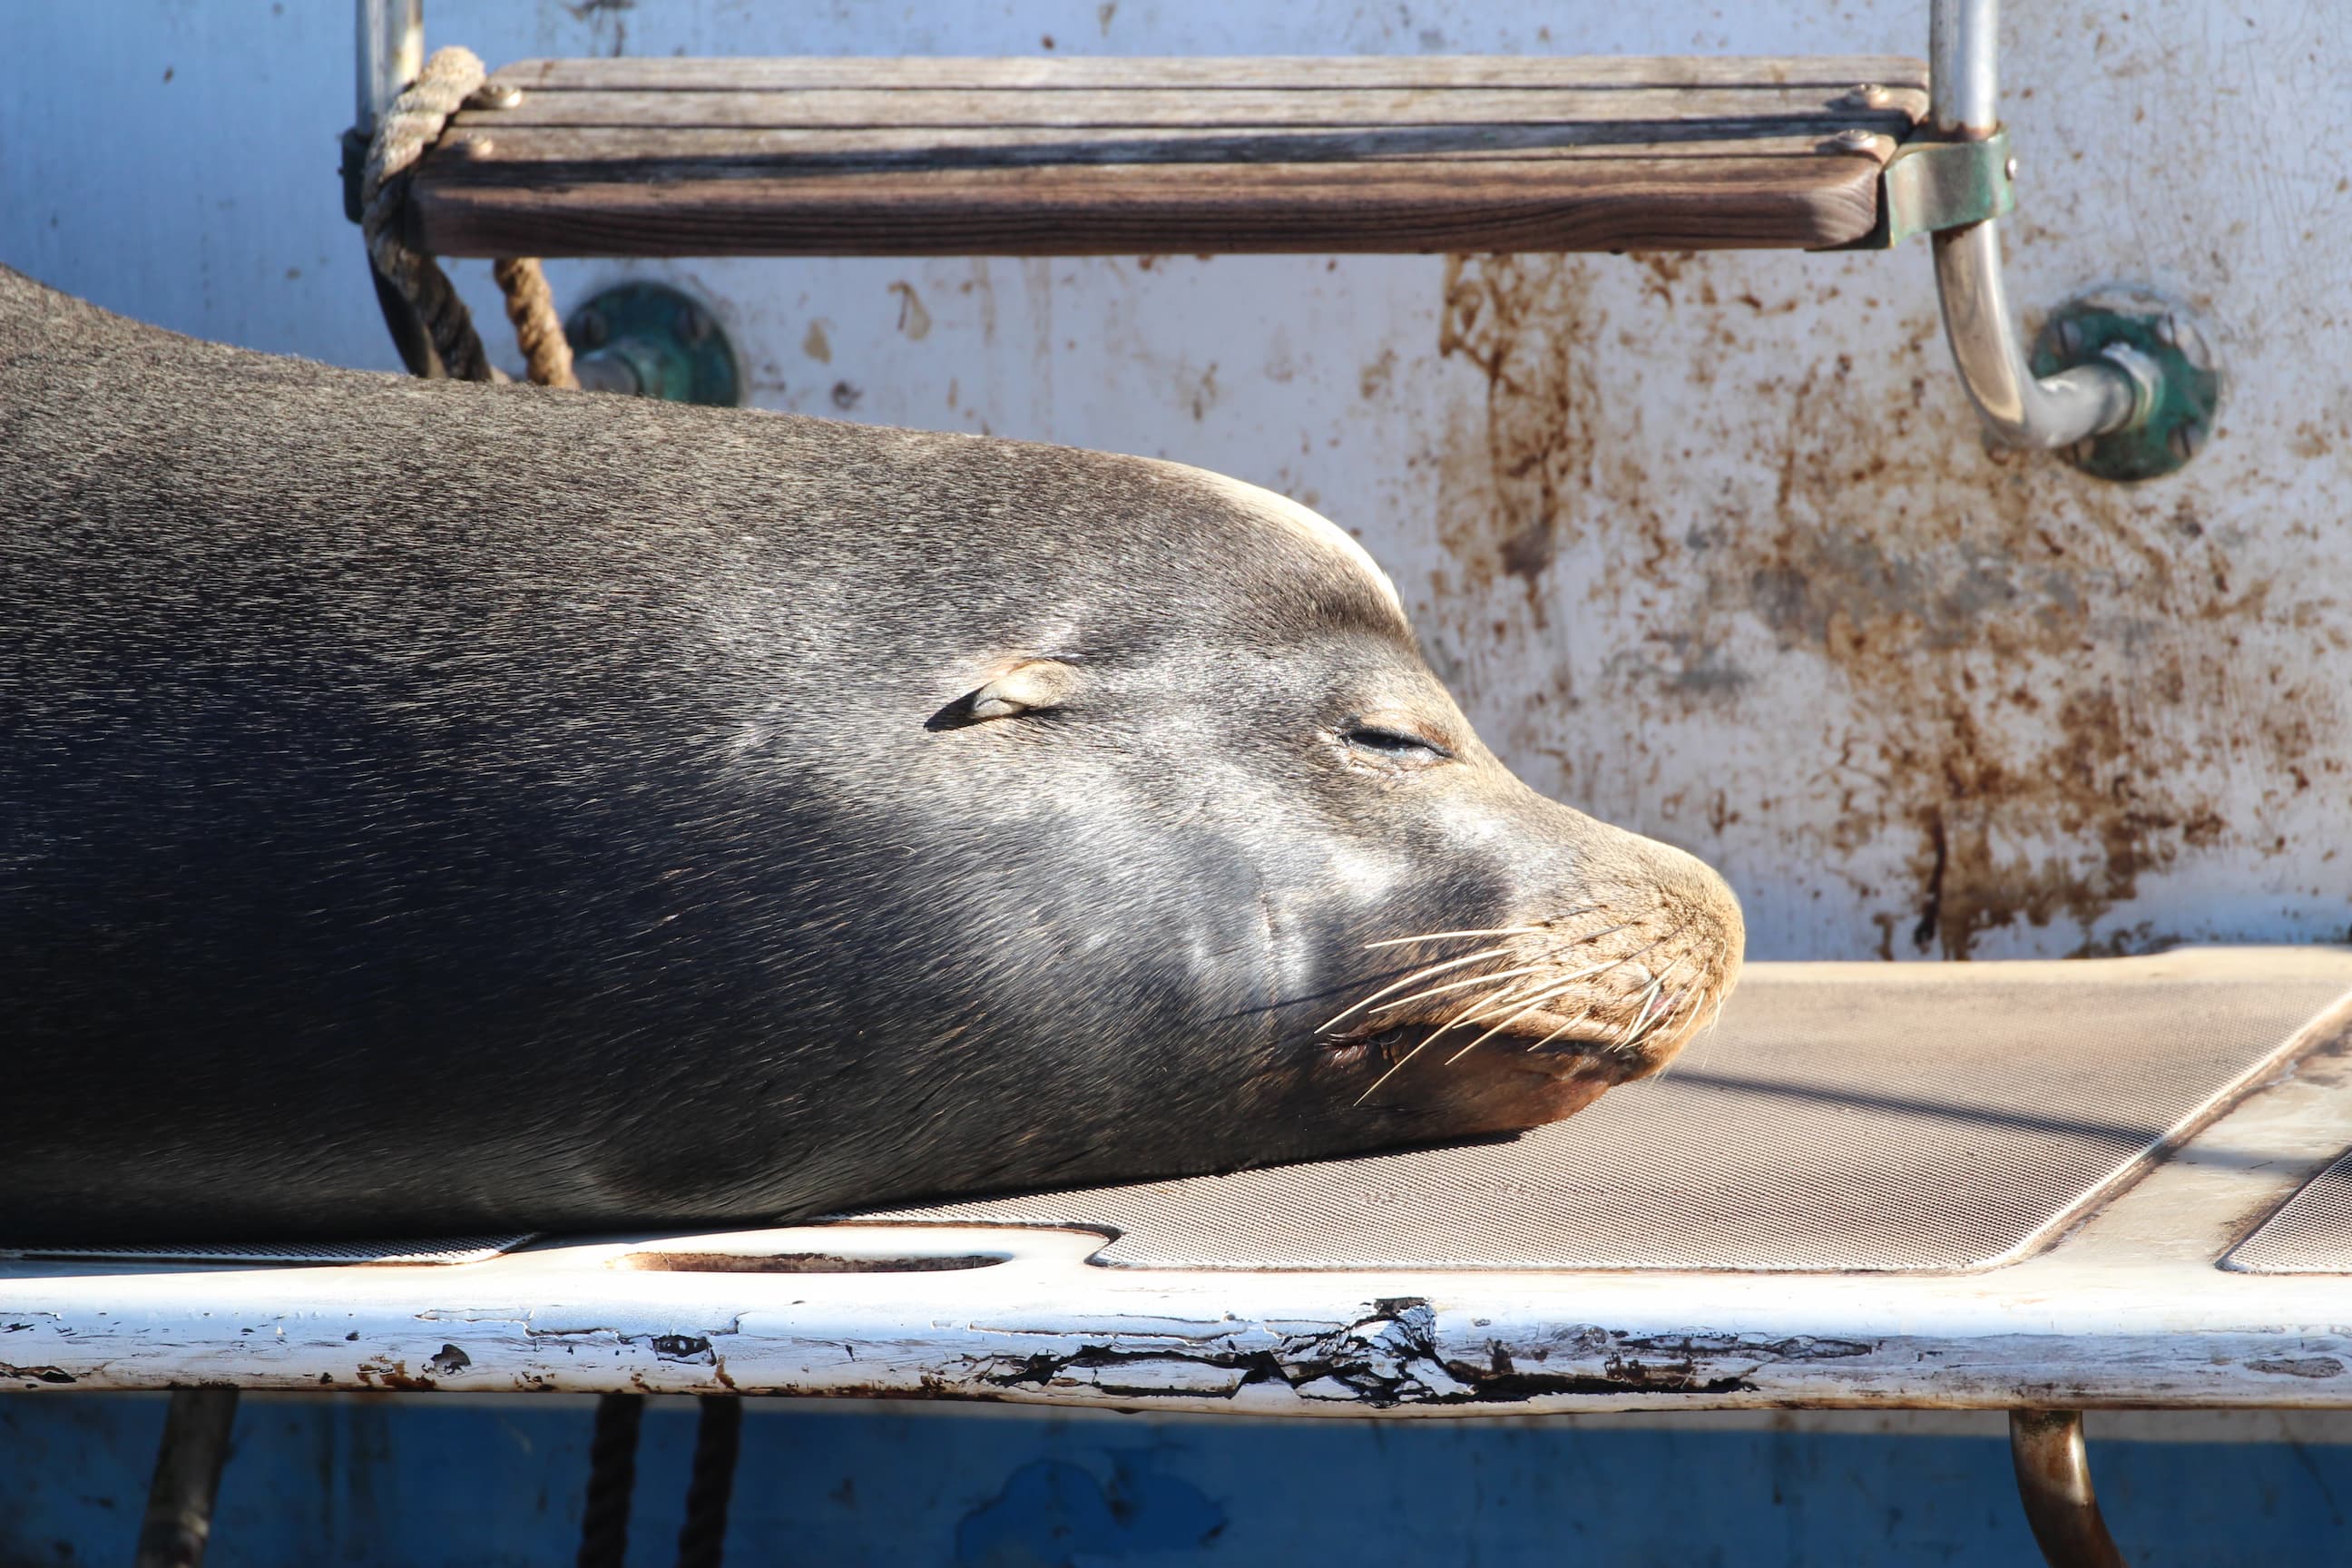 A sleeping sea lion